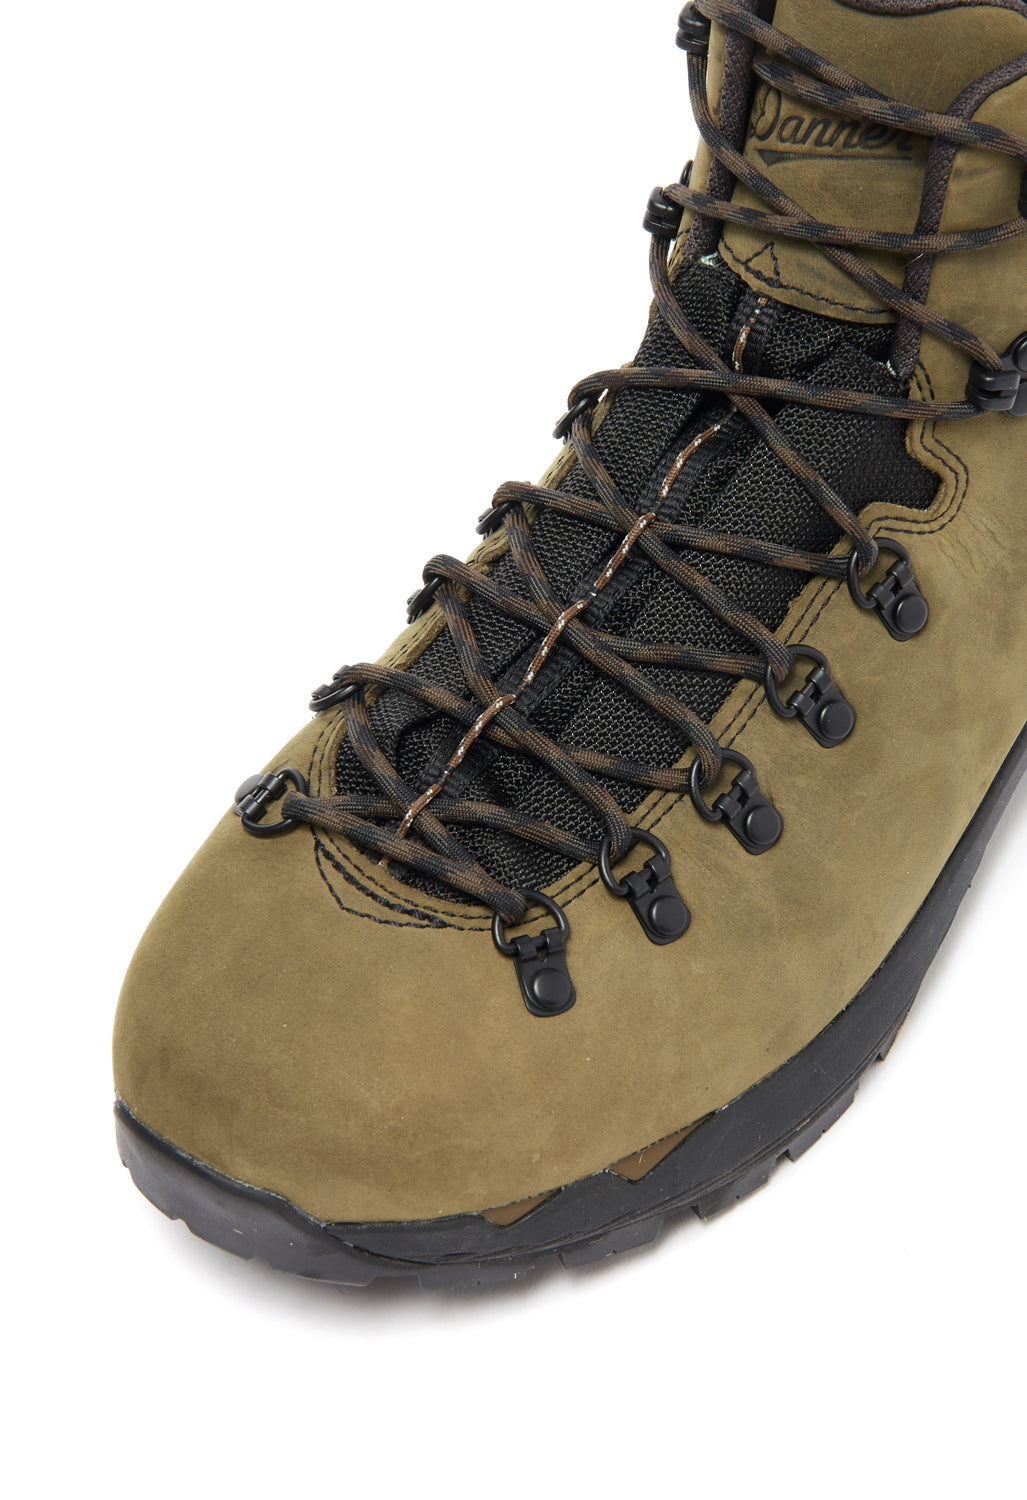 Danner Men's Mountain 600 EVO GTX Boots - Topsoil Brown / Black